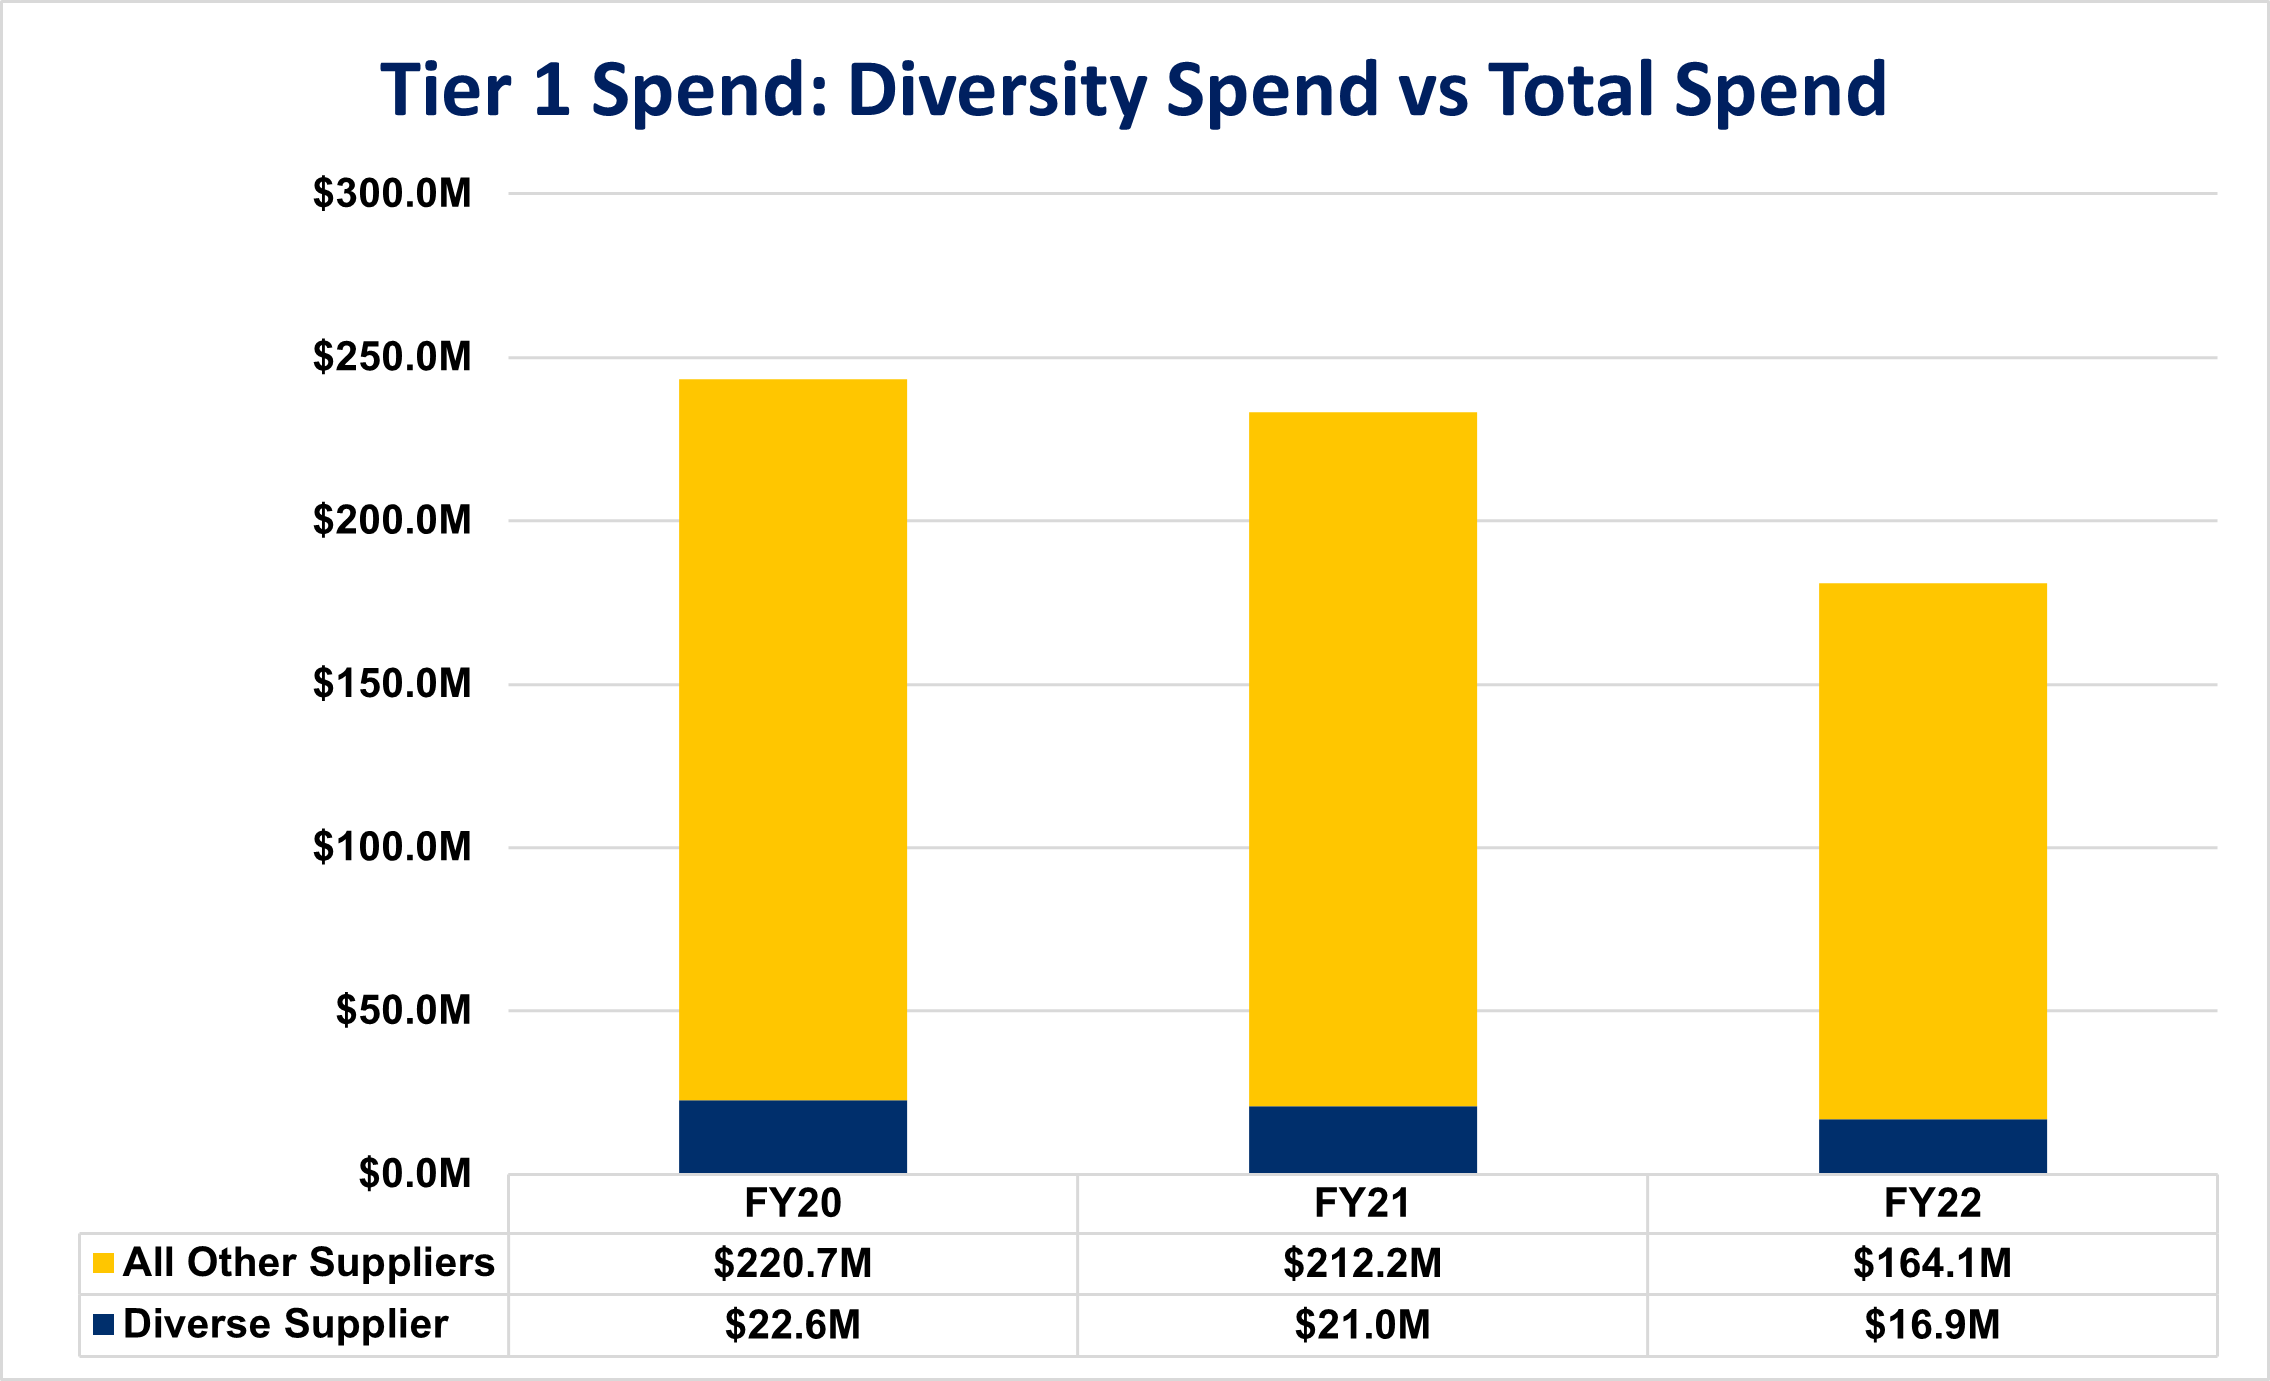 Tier 1 Spend: Diversity Spend vs. Total Spend